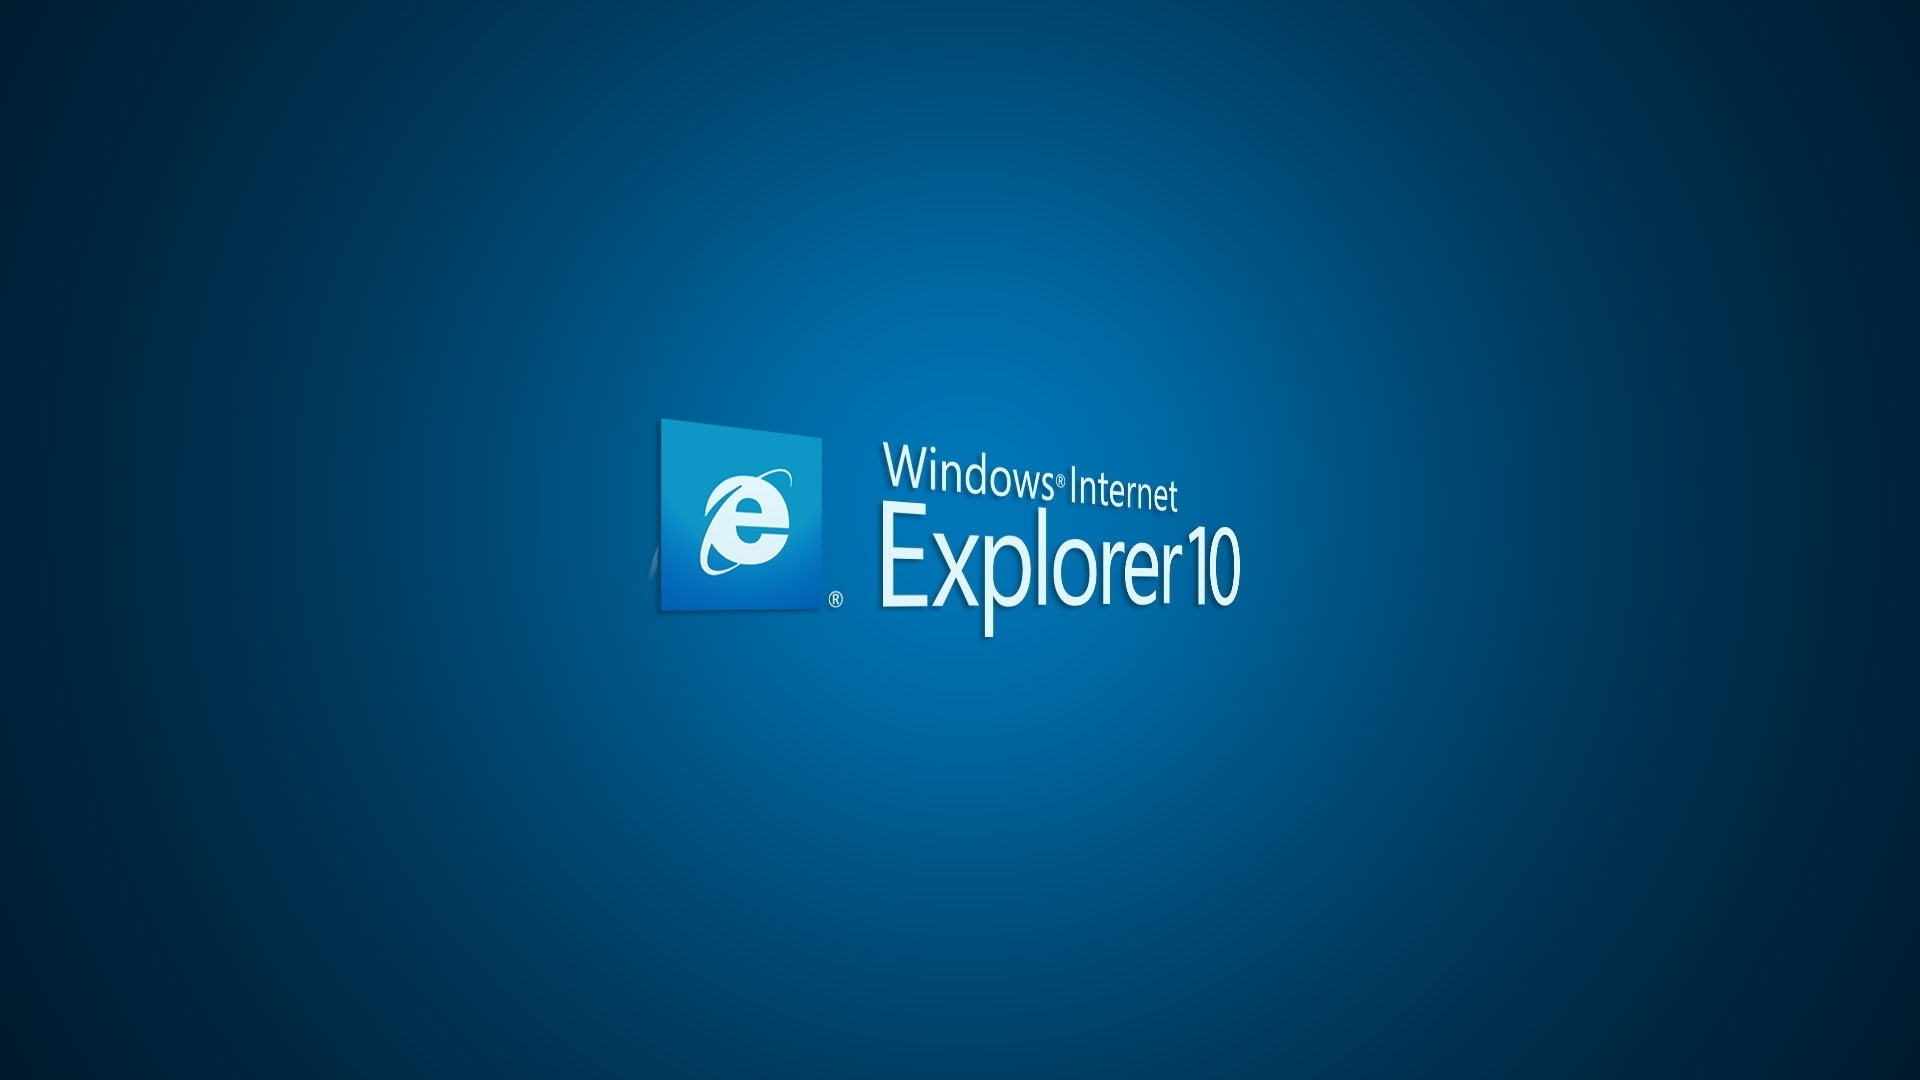  blogspot com 2012 10 microsoft windows internet explorer 10 html 1920x1080